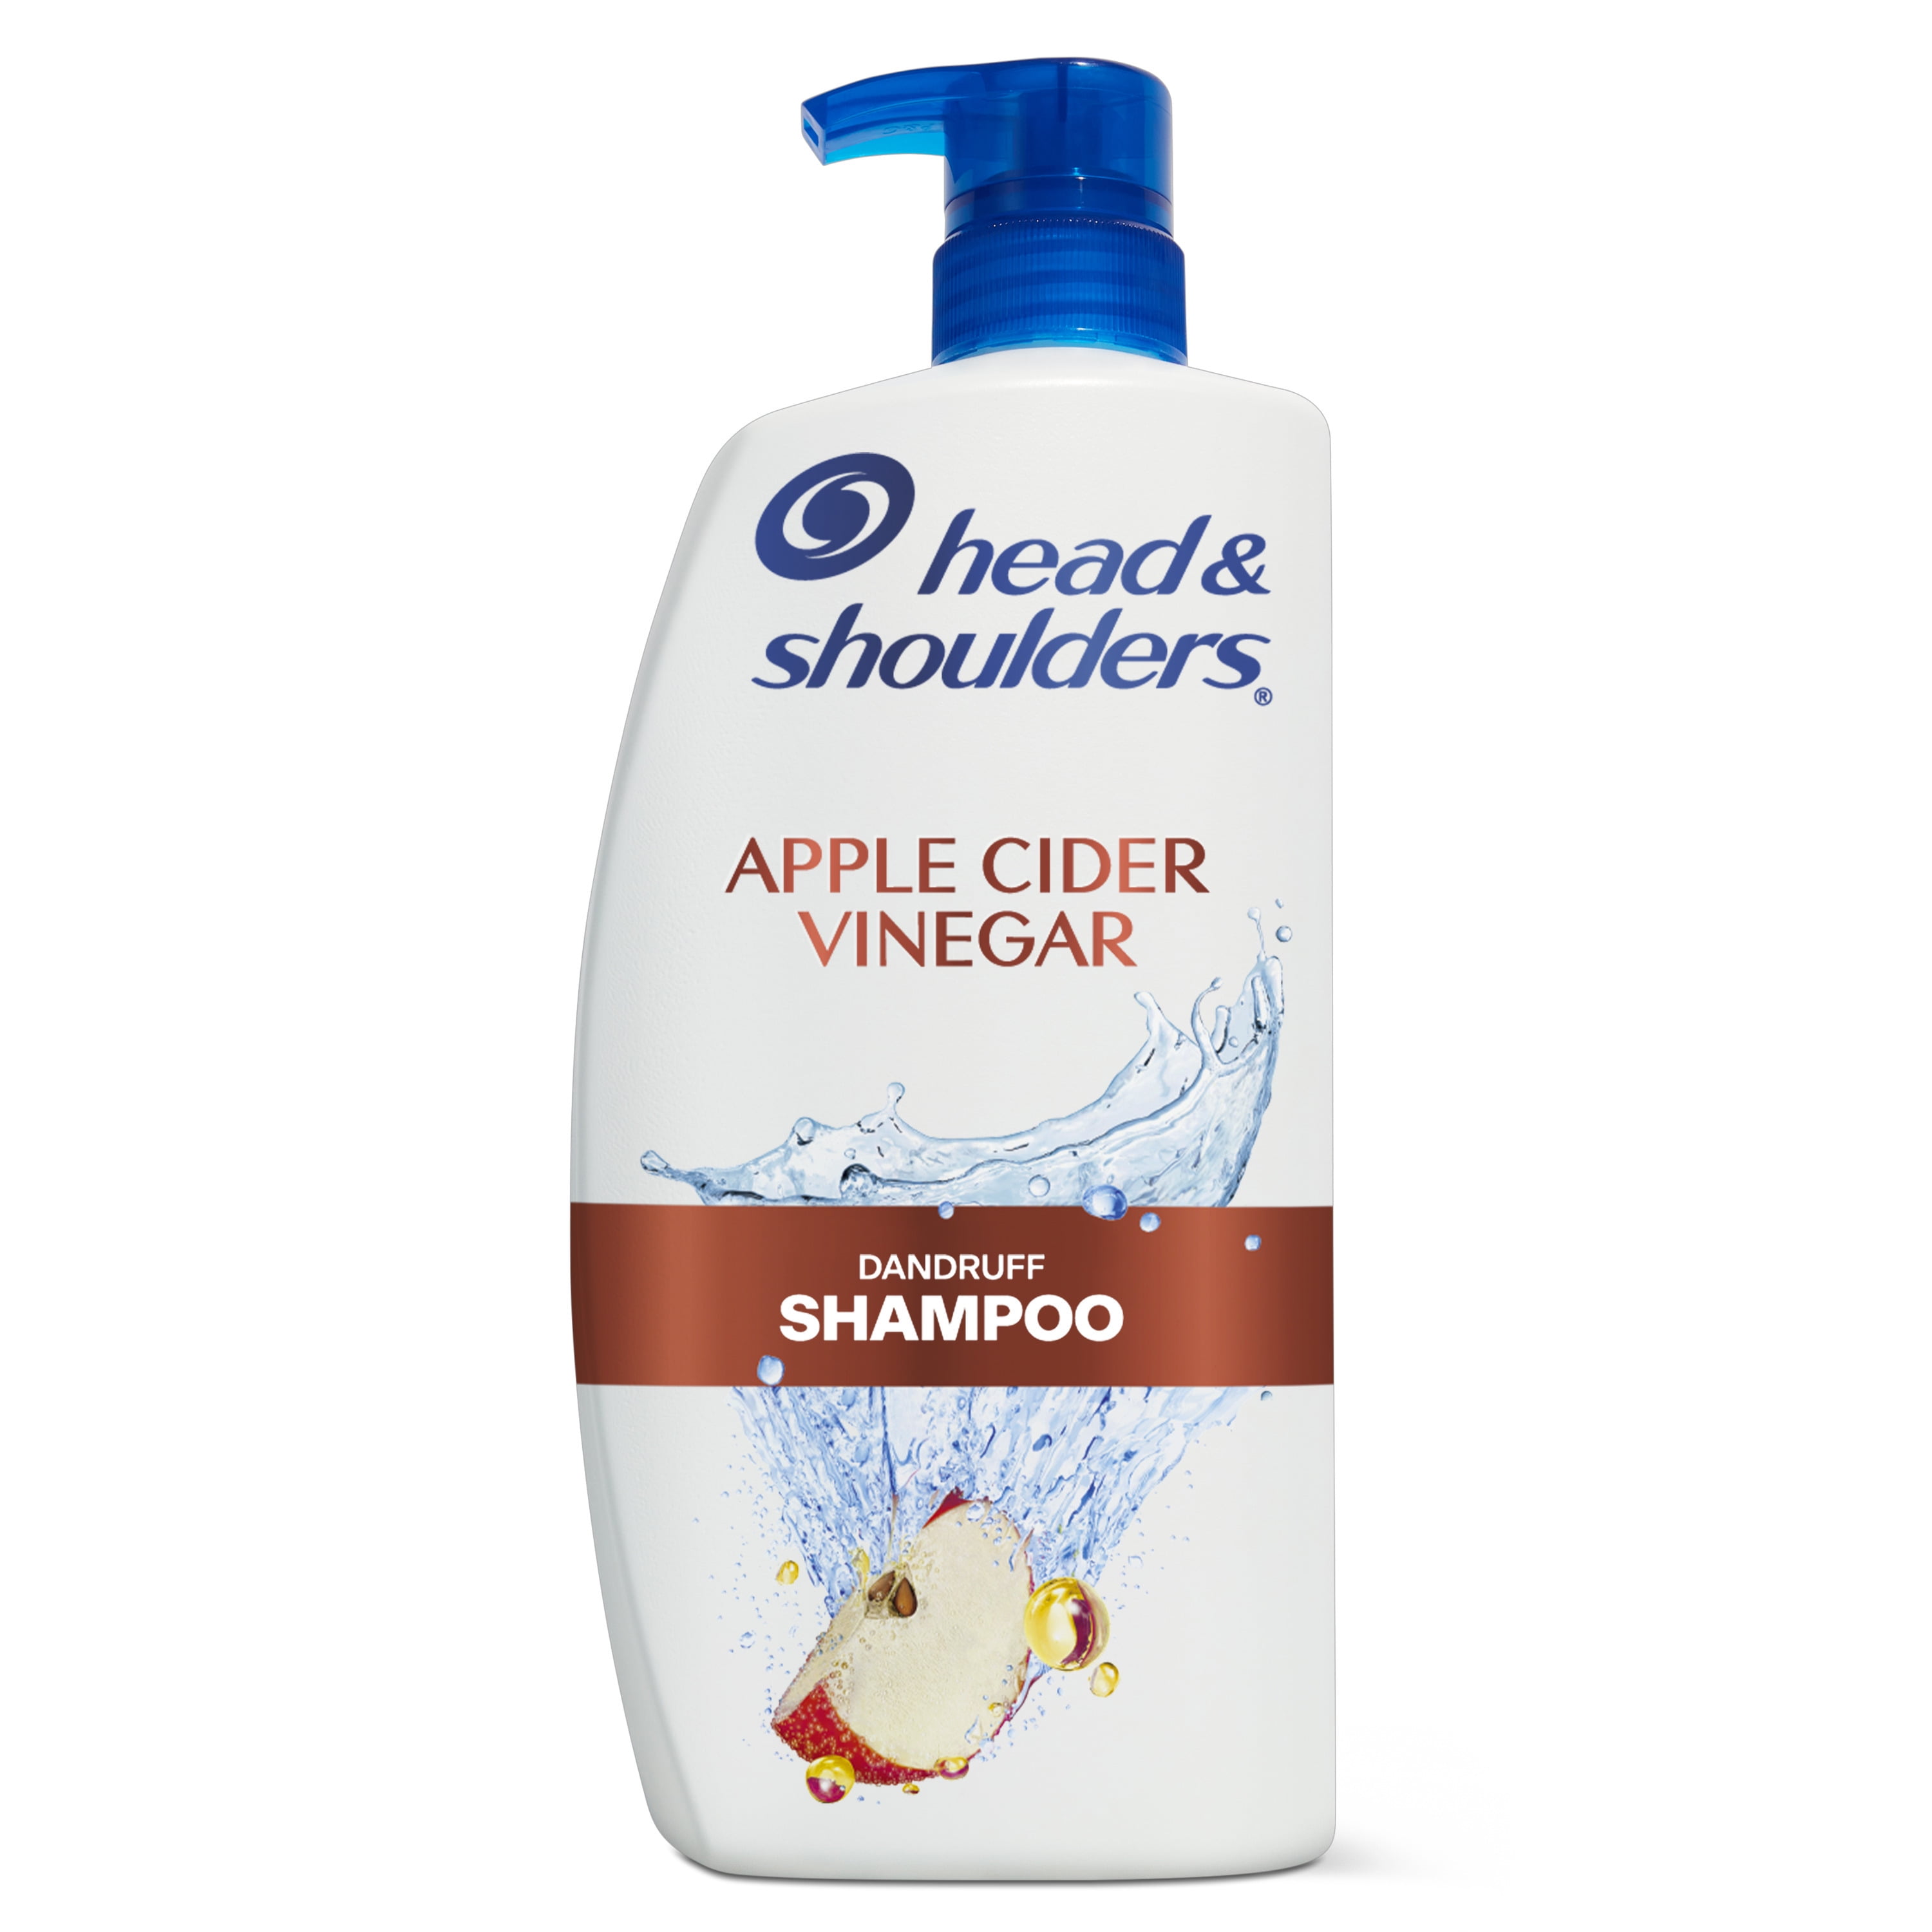 Head & Shoulders Head and Shoulders Dandruff Shampoo, Apple Cider Vinegar, 28.2 oz